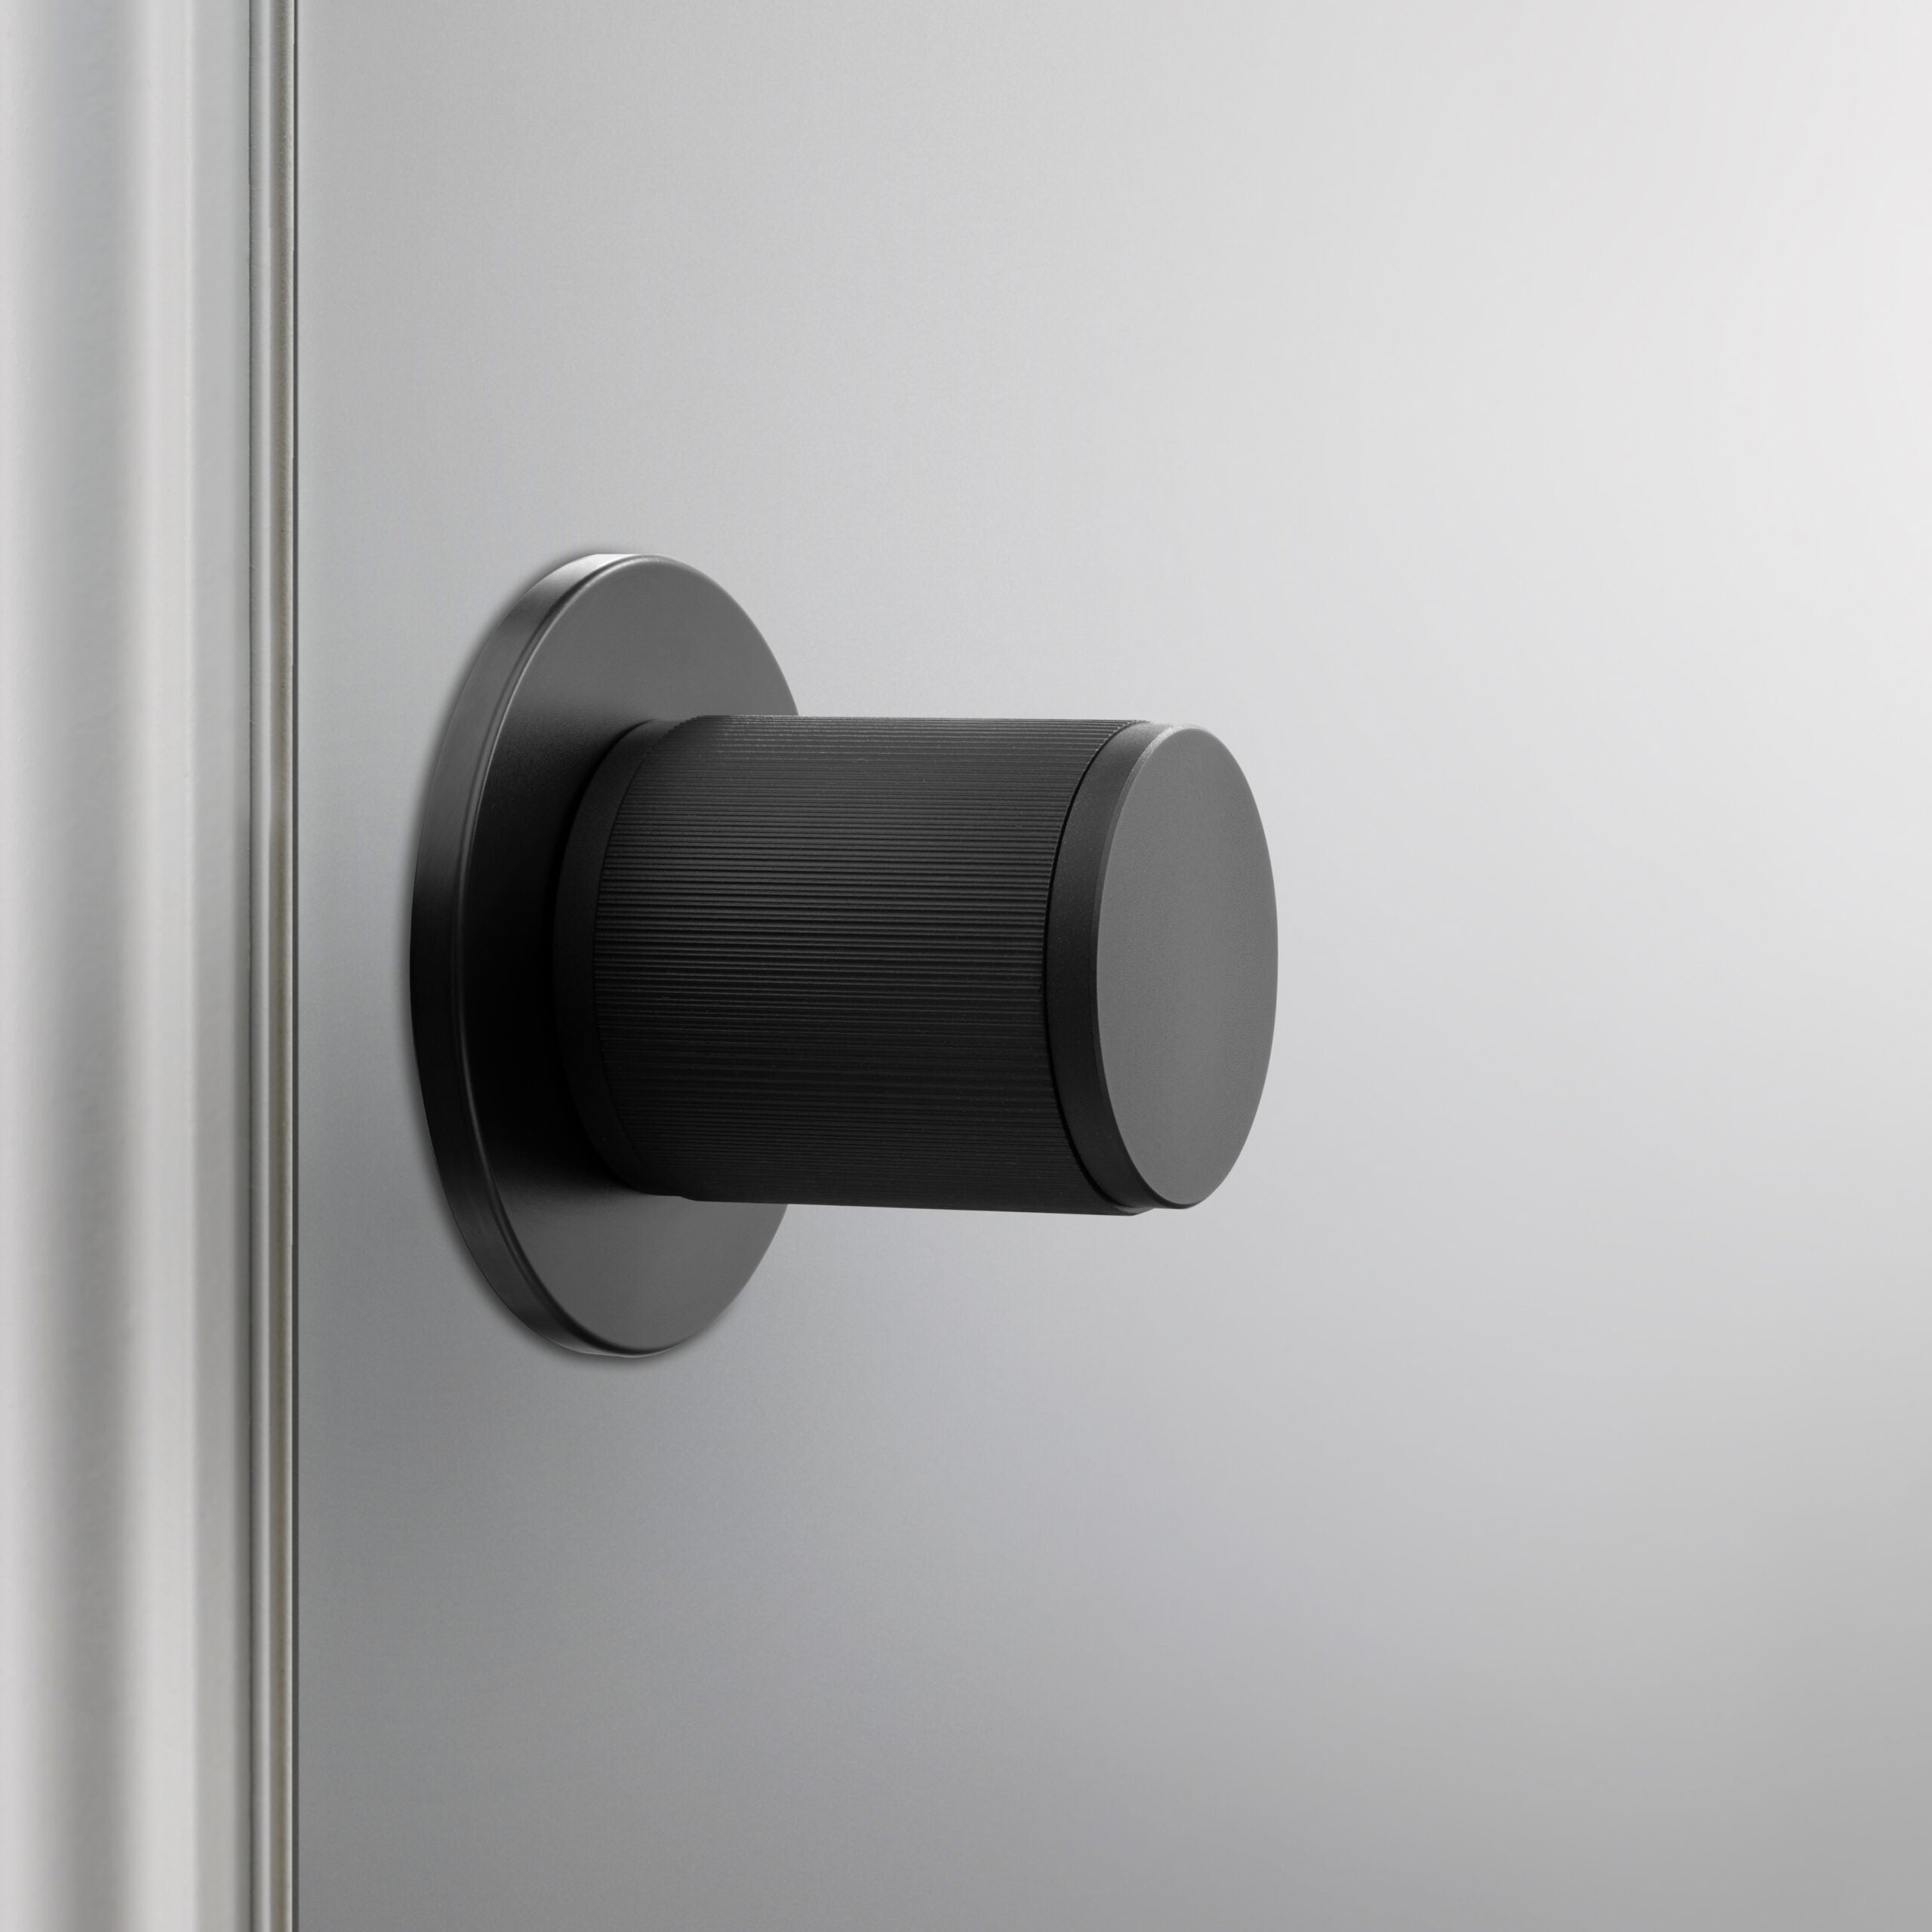 Buster + Punch Door Knob Set of 2, Linear Design, PASSAGE TYPE